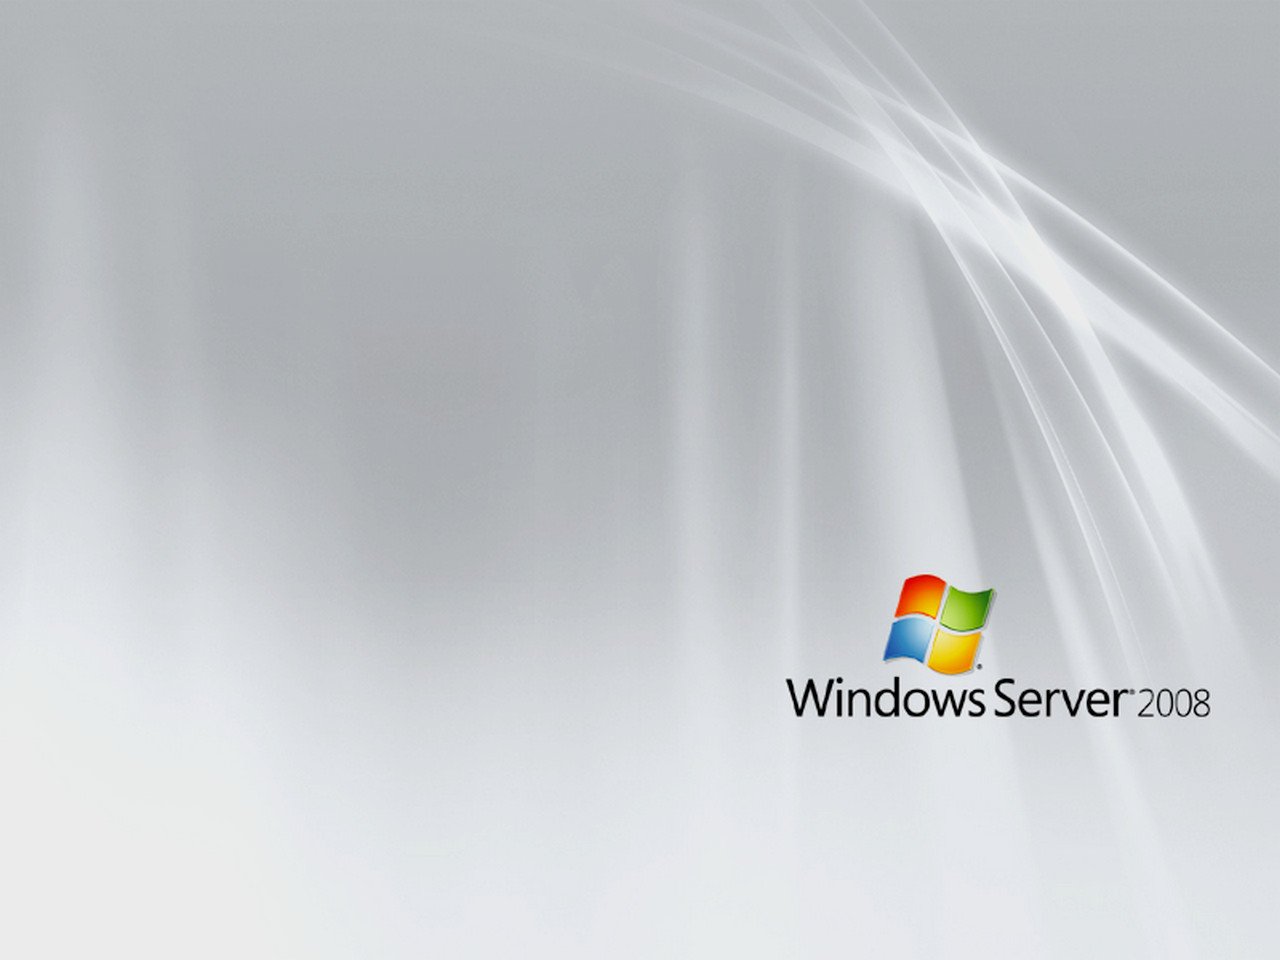 Windows Server 2008 Wallpaper by Auron2 on